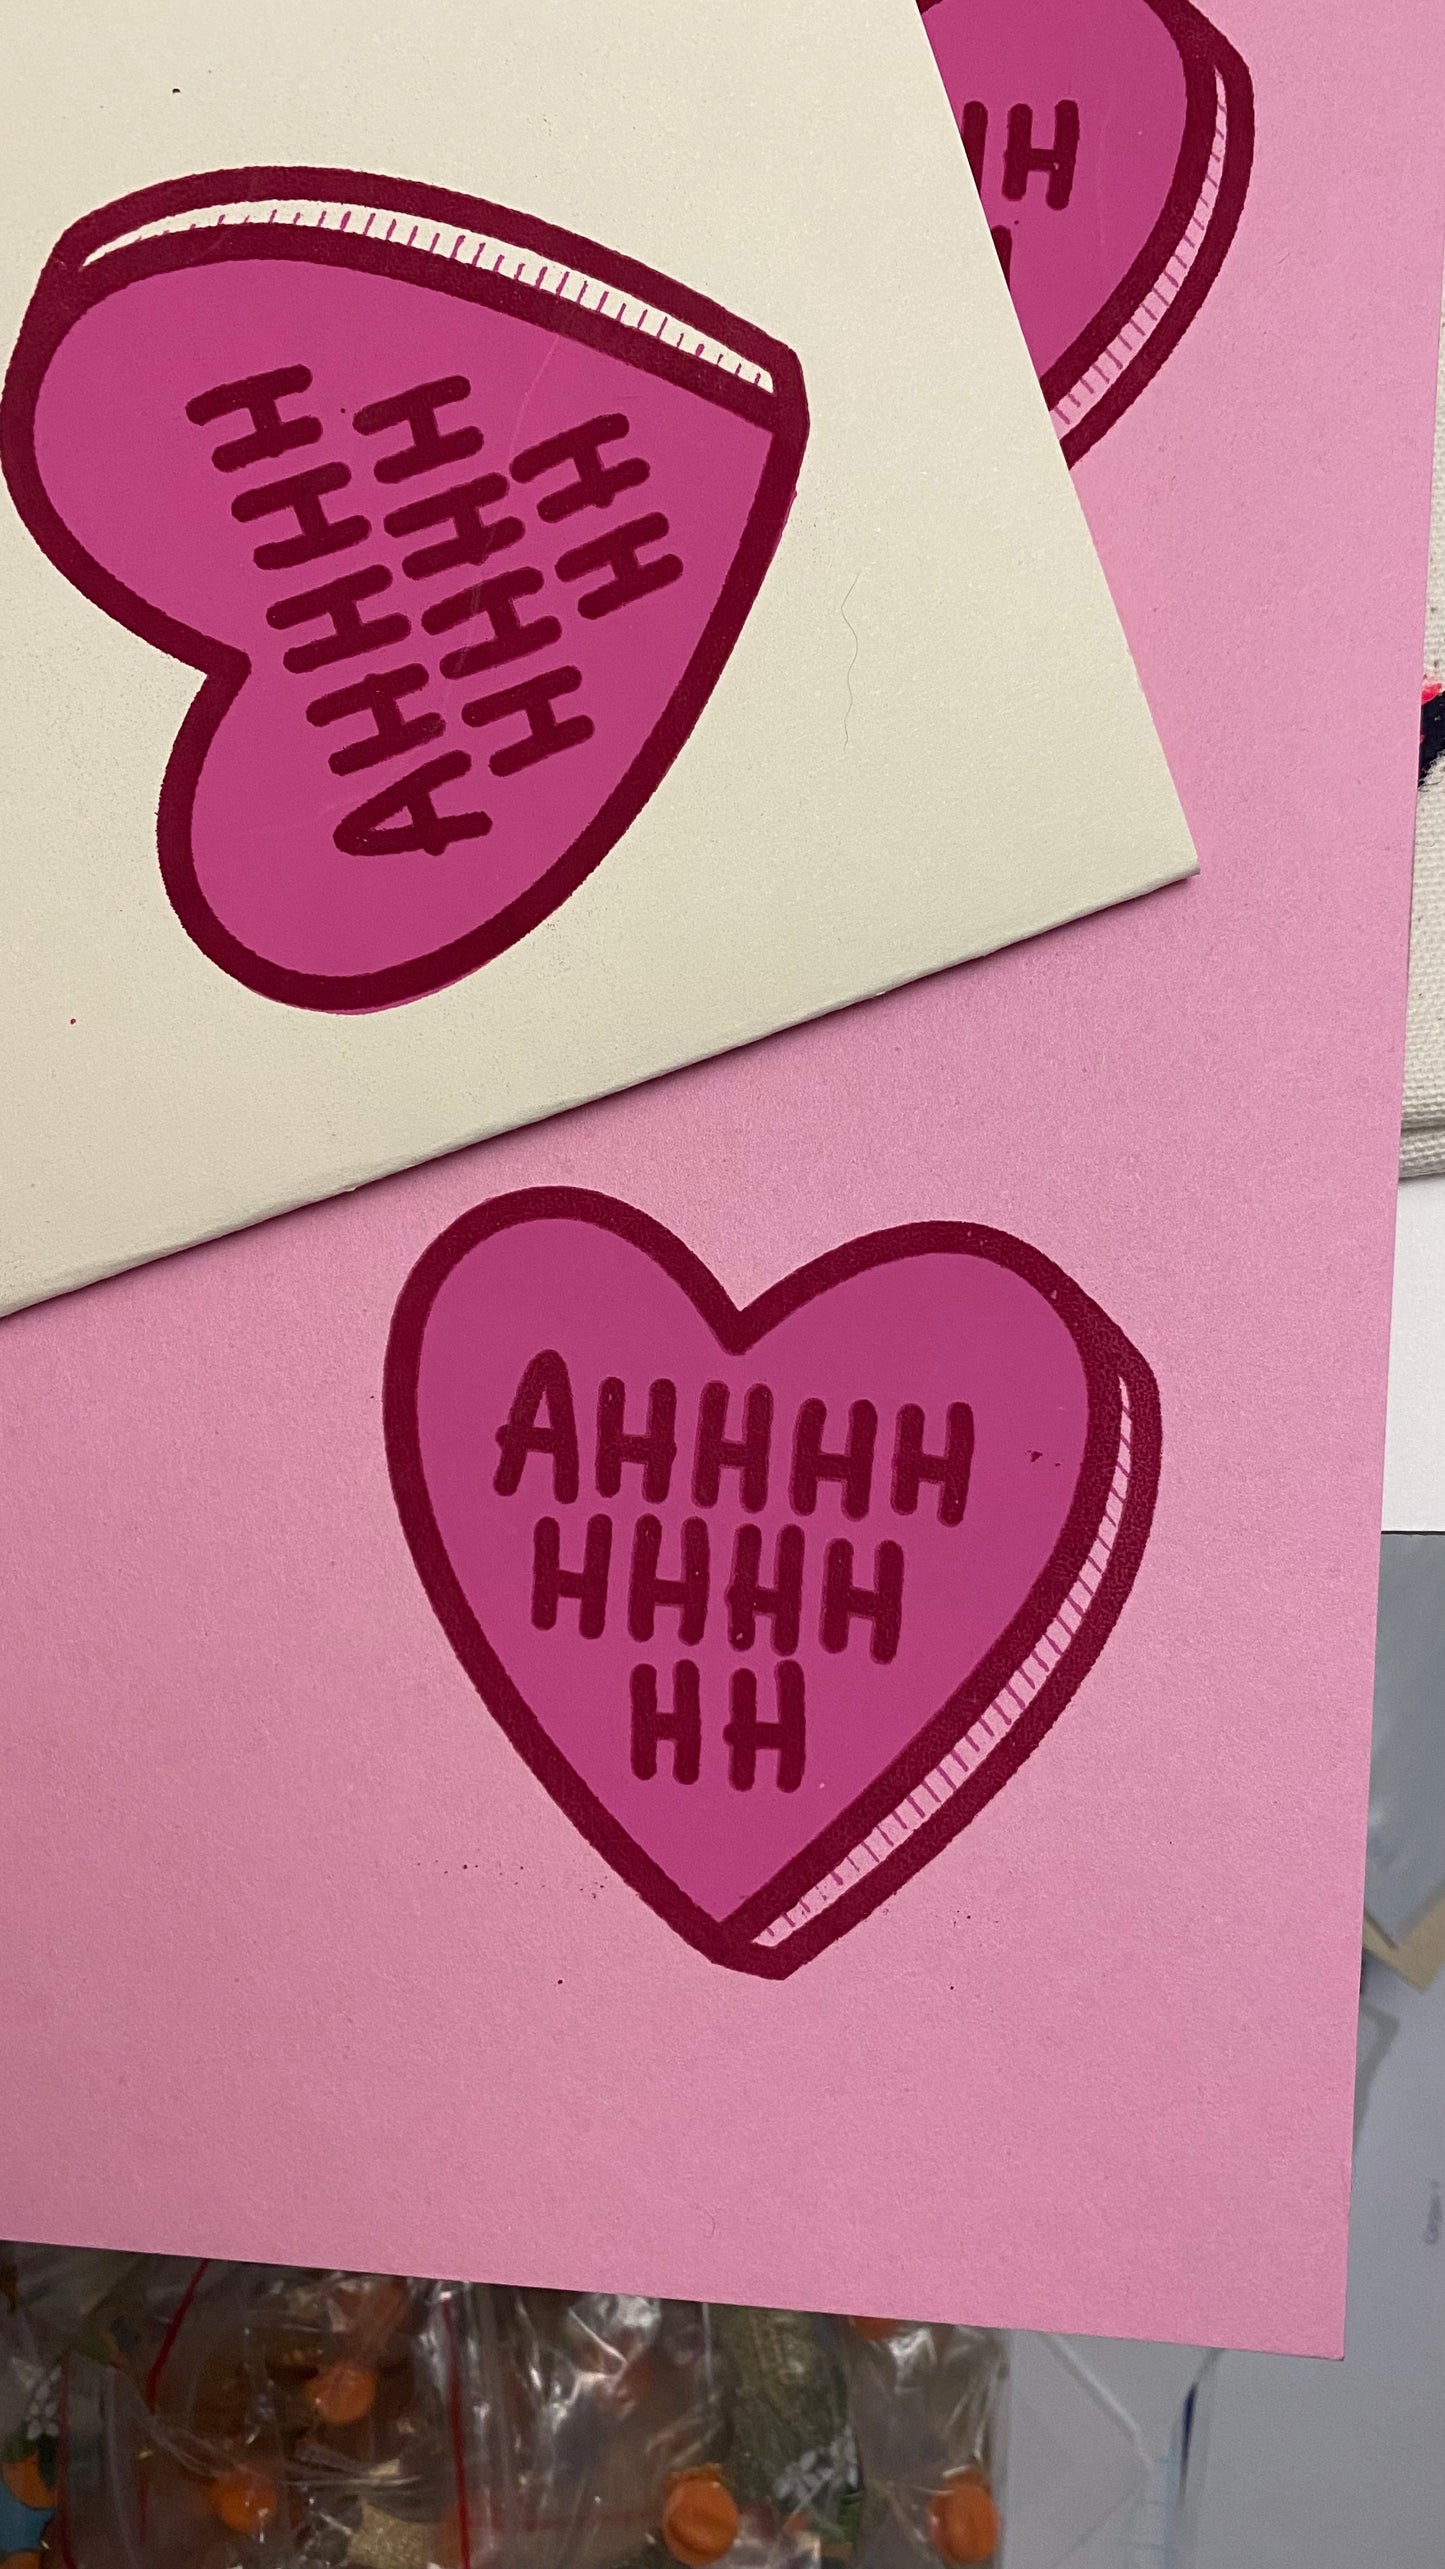 AHHHHHHHH Greeting Card - Cream or Pink